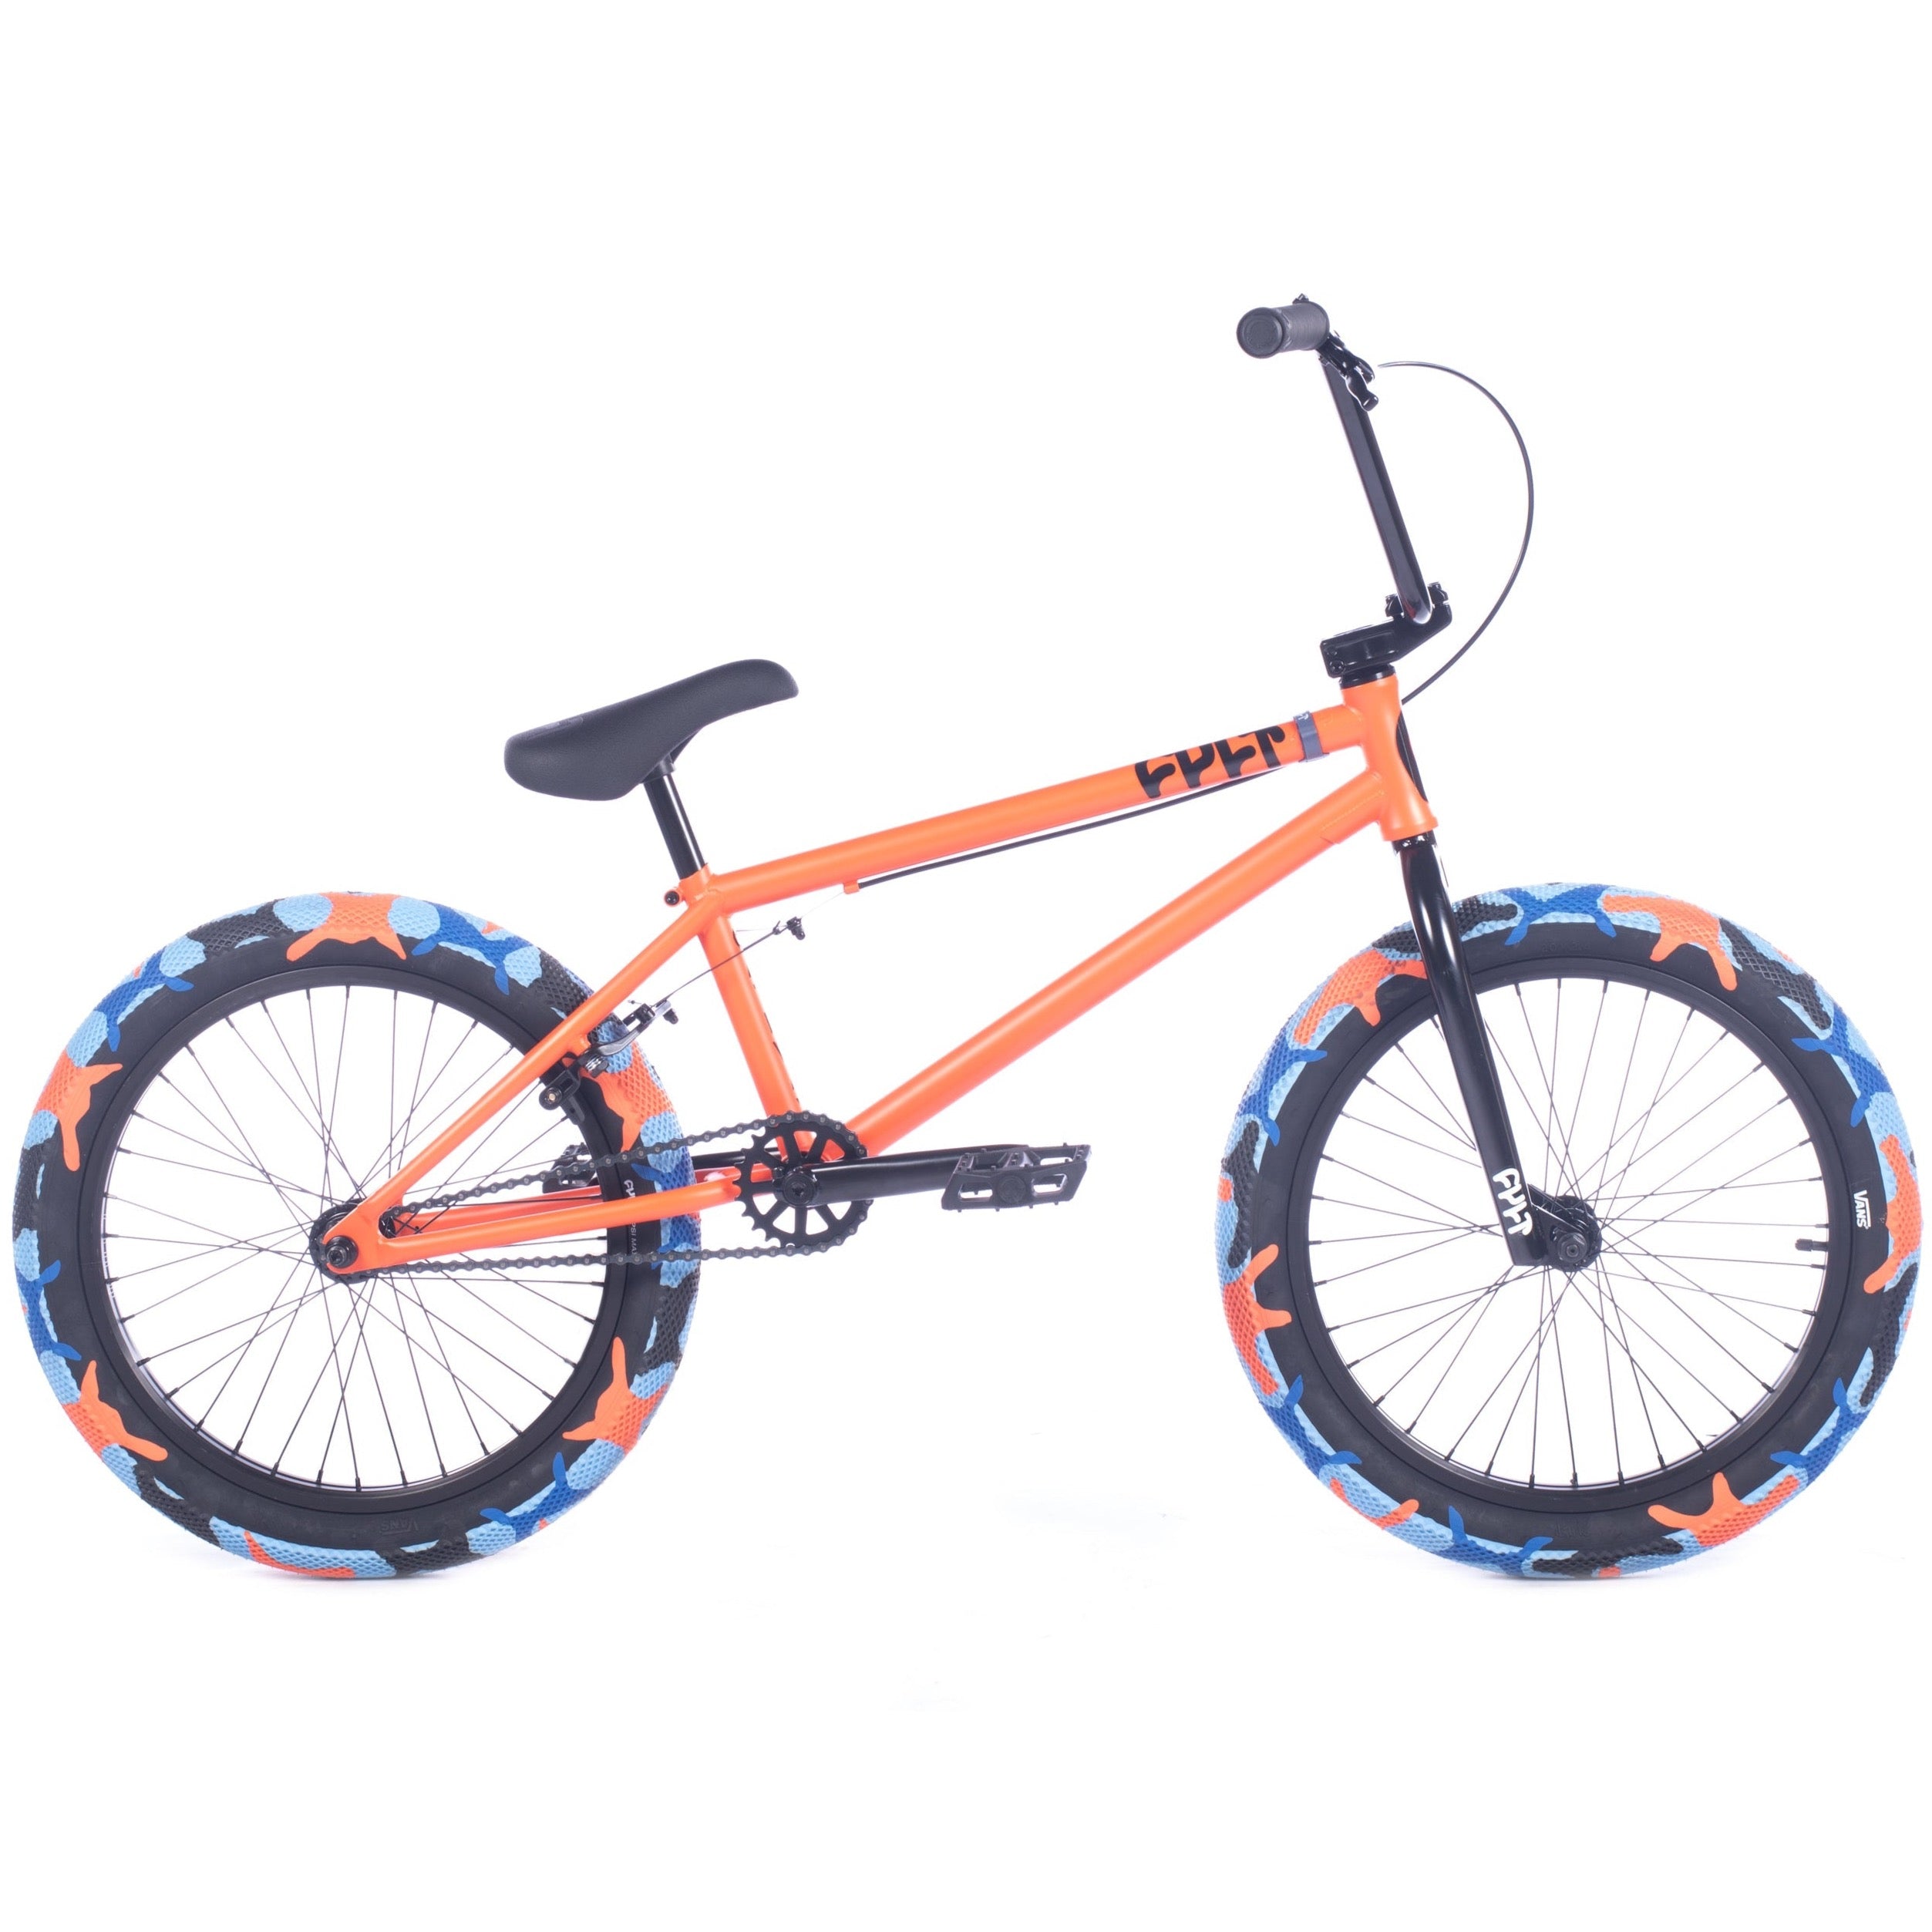 Cult 2024 Gateway BMX Bike - Orange With Black Parts And Blue / Orange Camo Tyres 20.5" Side View | Backyard UK BMX Shop Hastings